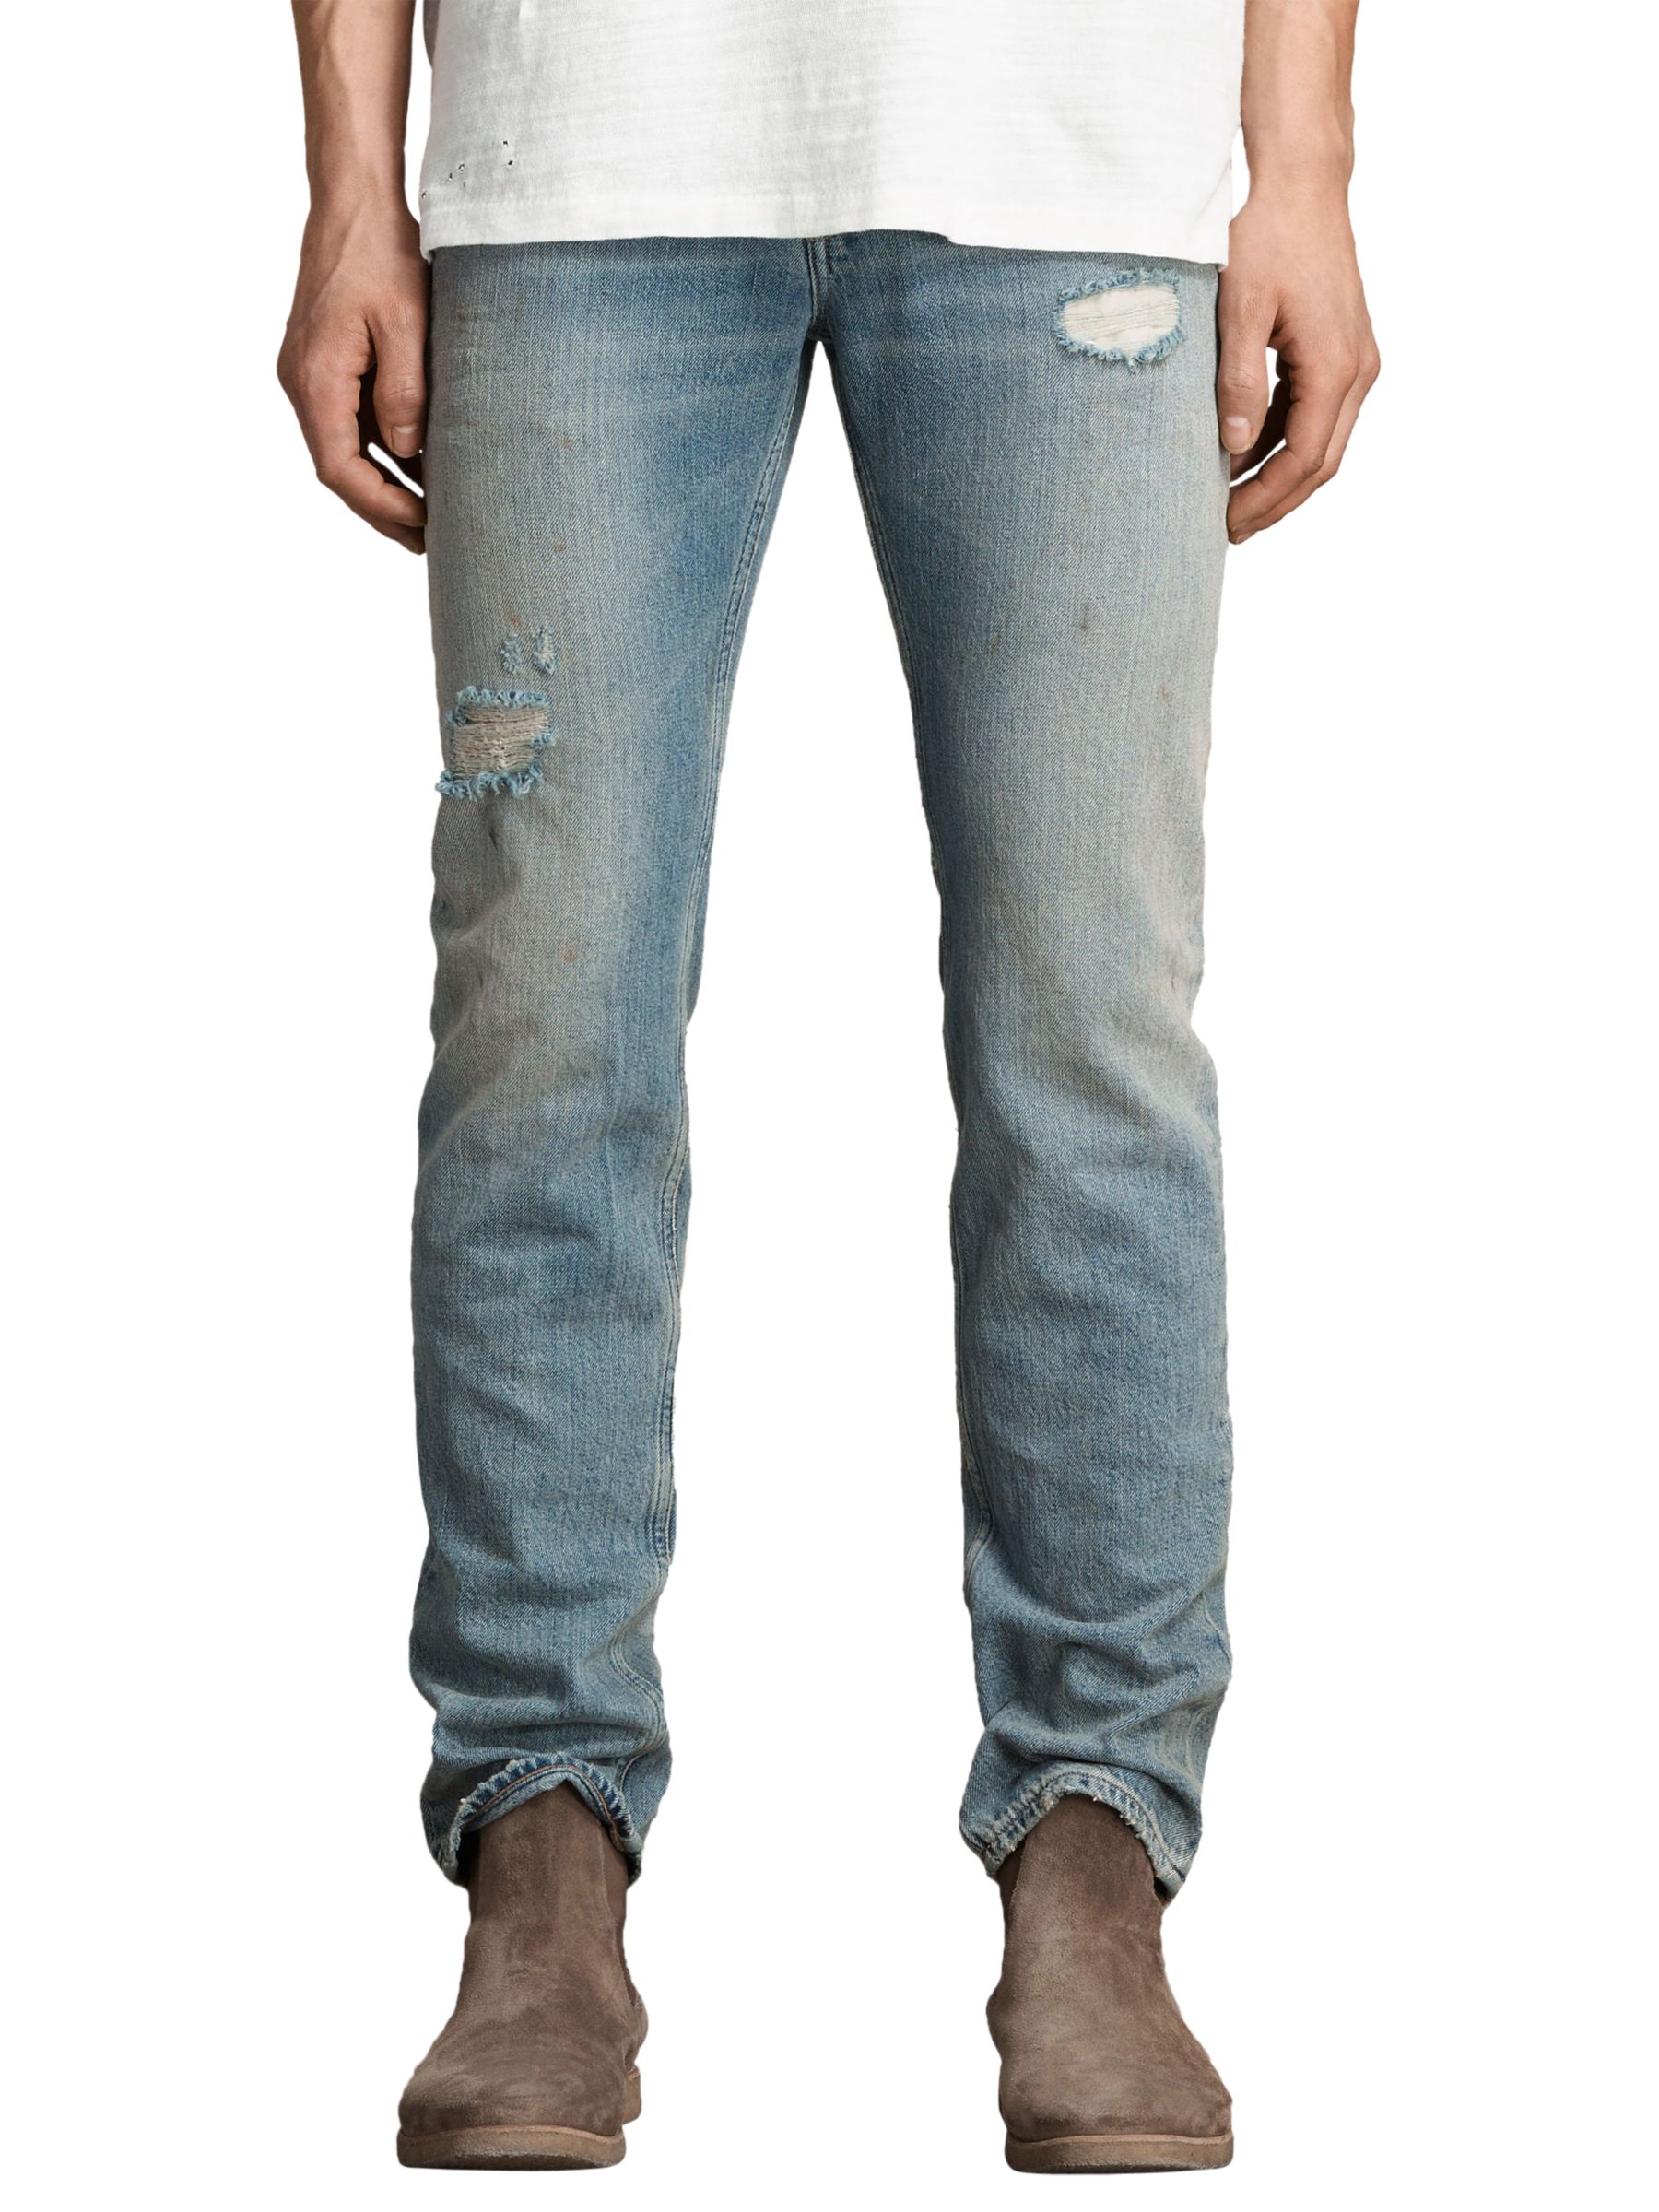 AllSaints Iggy Slim Fit Distressed Jeans, Indigo Blue, 28R